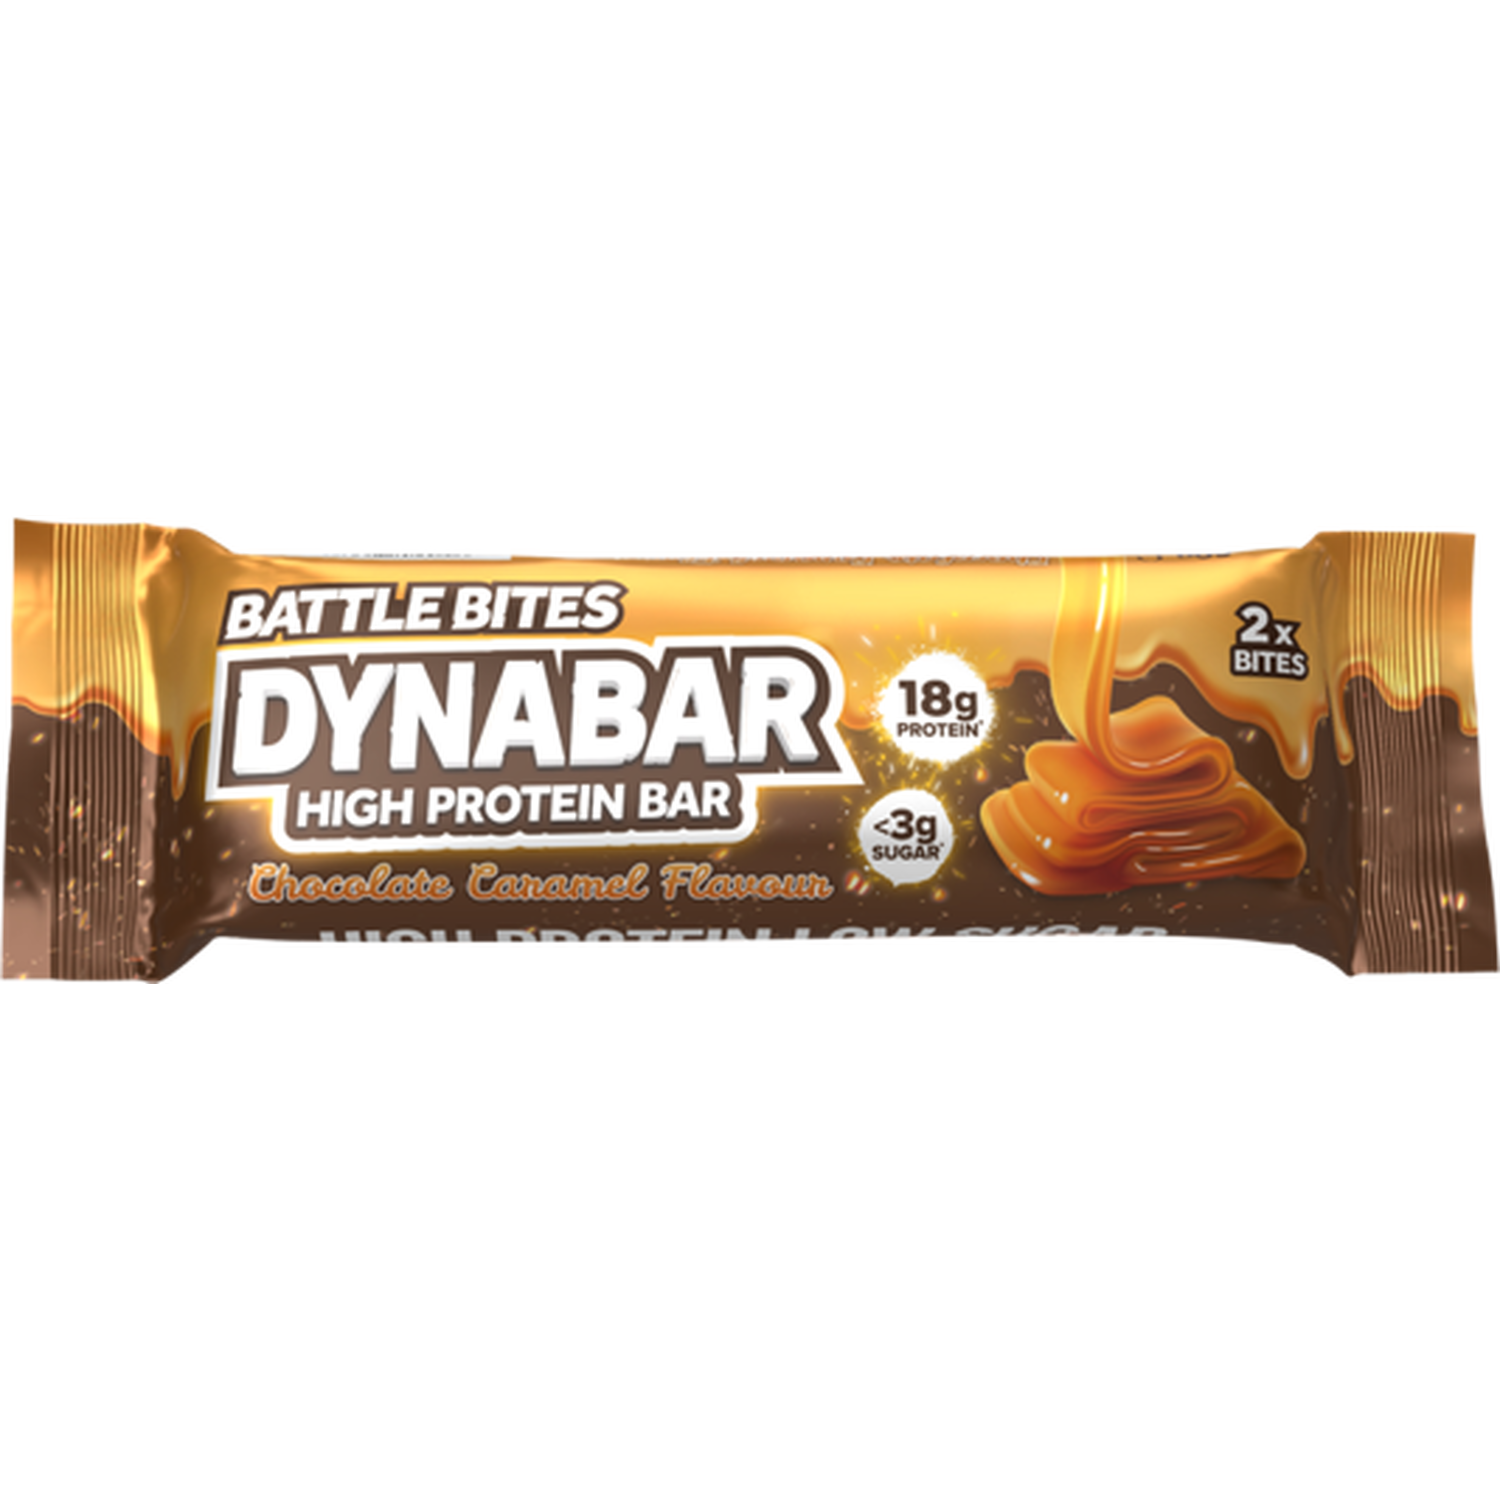 Battle Bites Chocolate Caramel Dynabar High Protien Bar Image